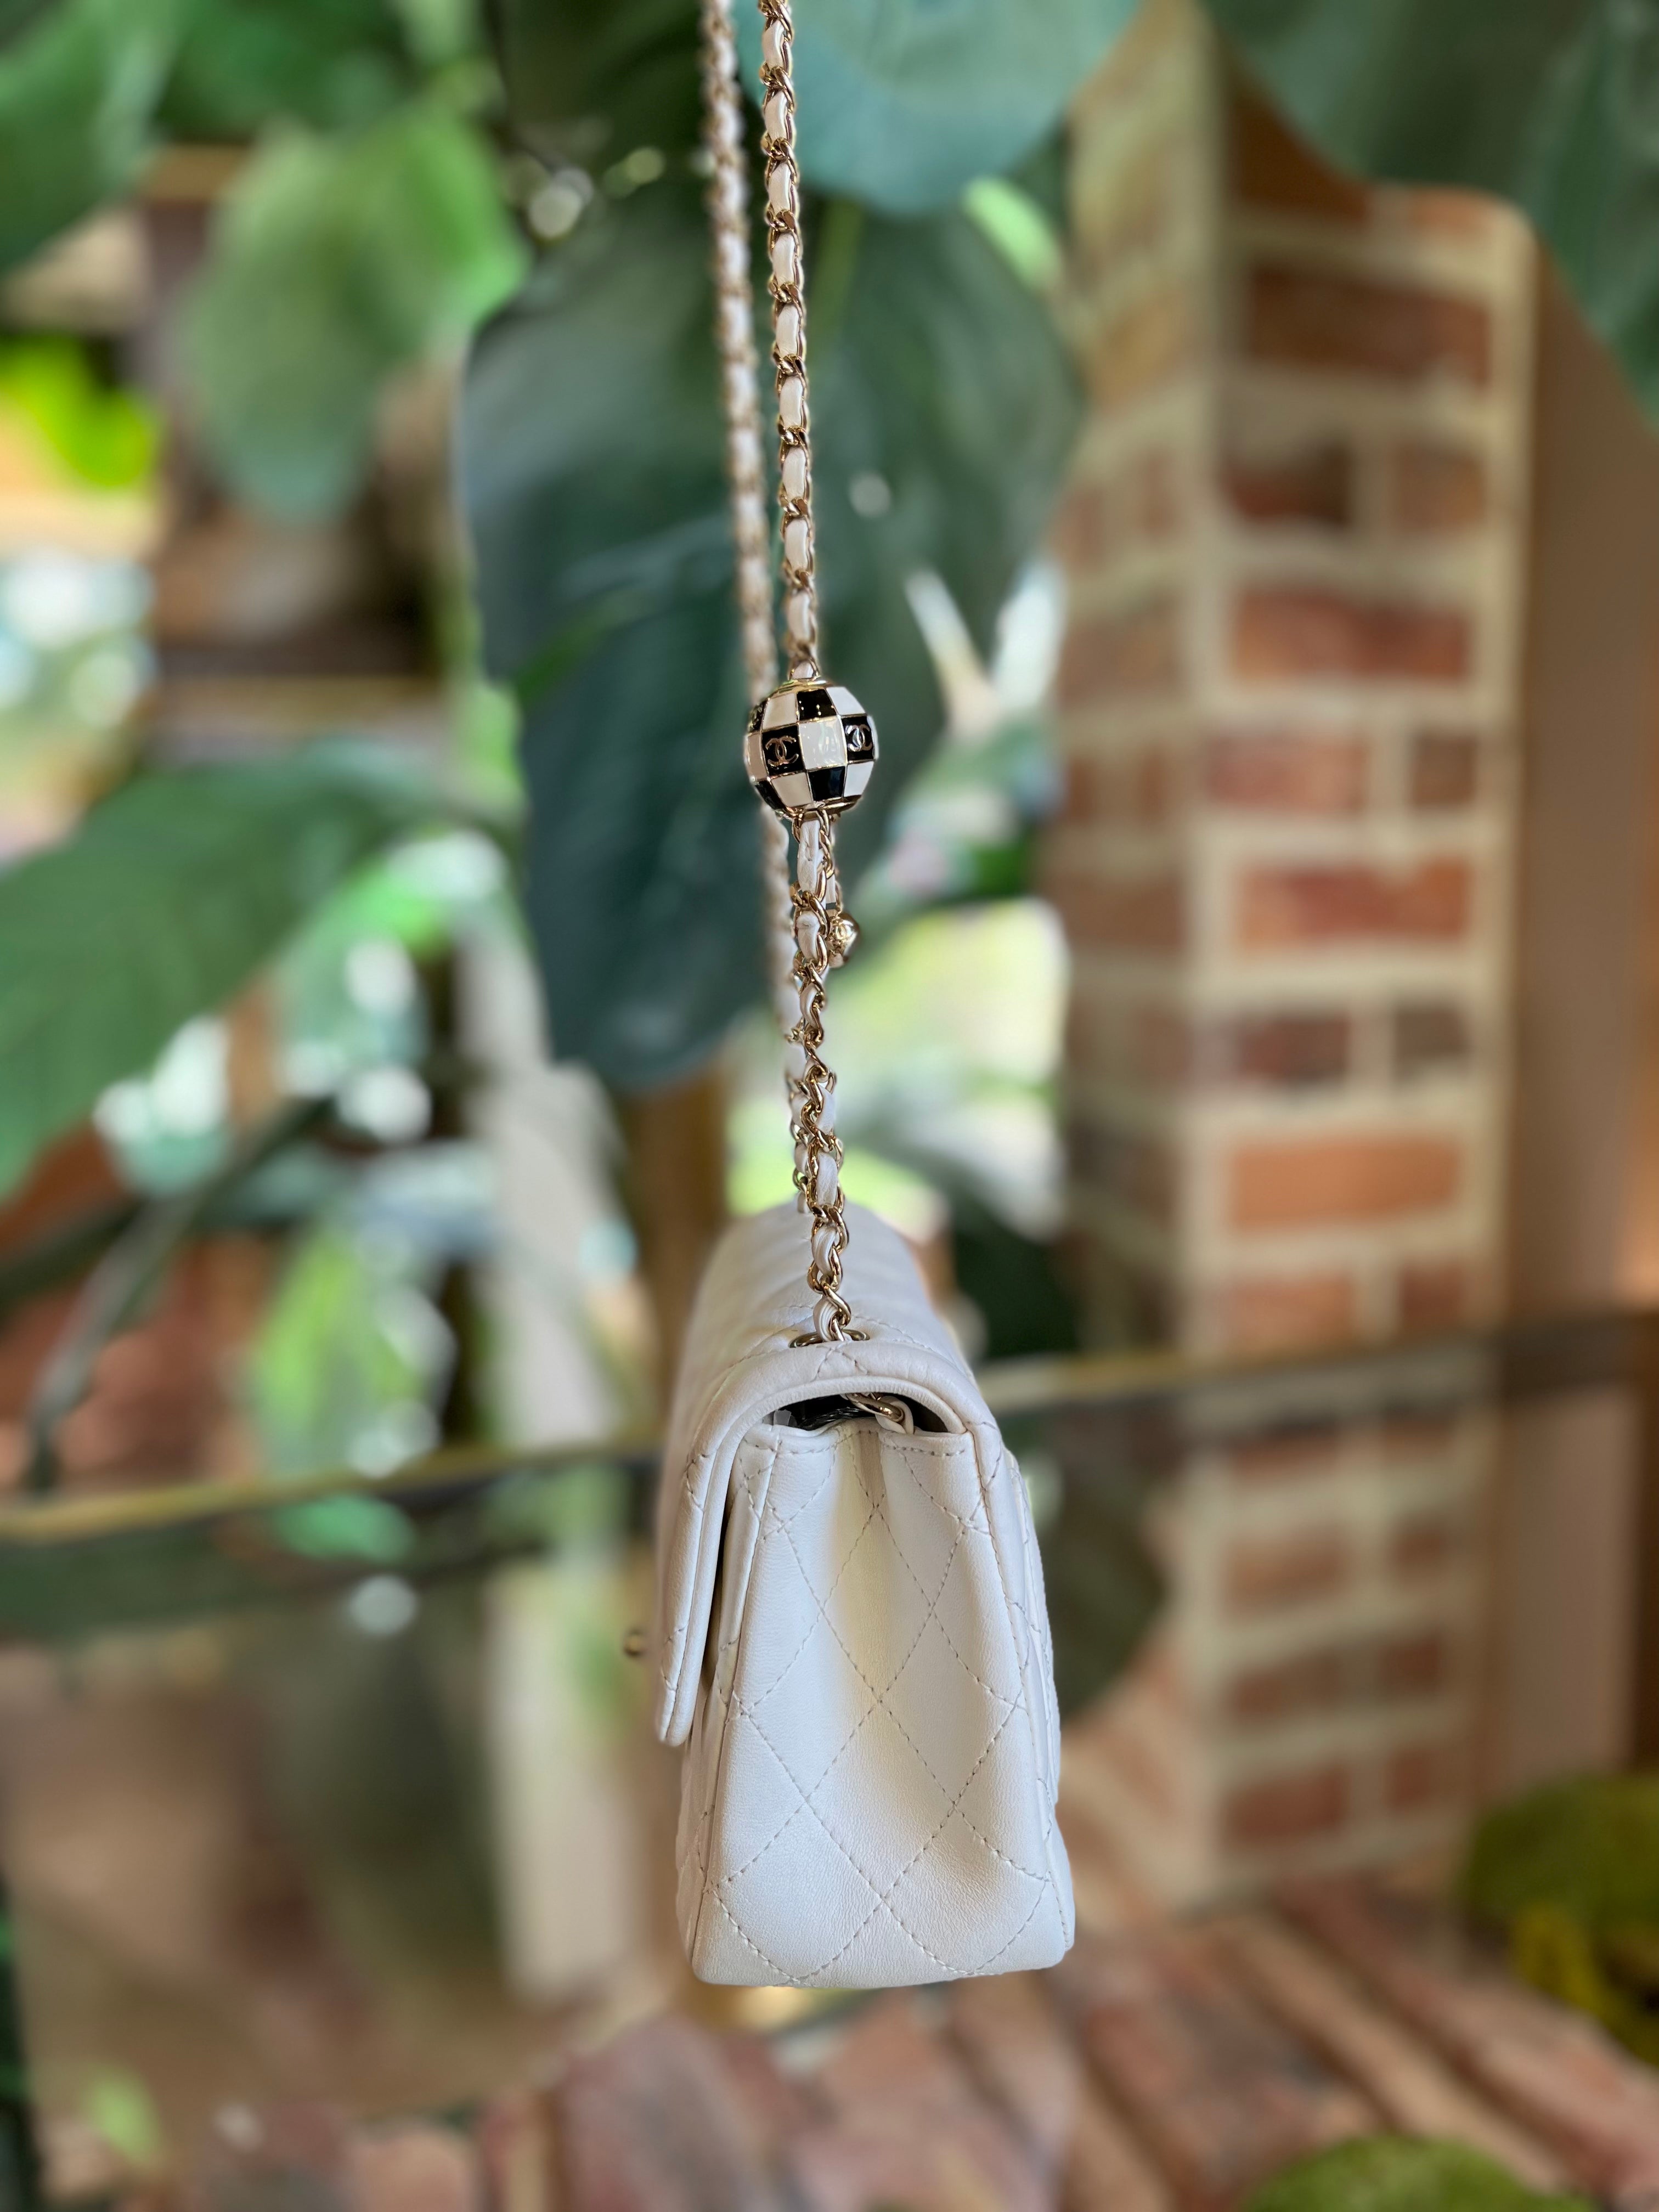 Chanel Mini Pearl Crush Flap Bag